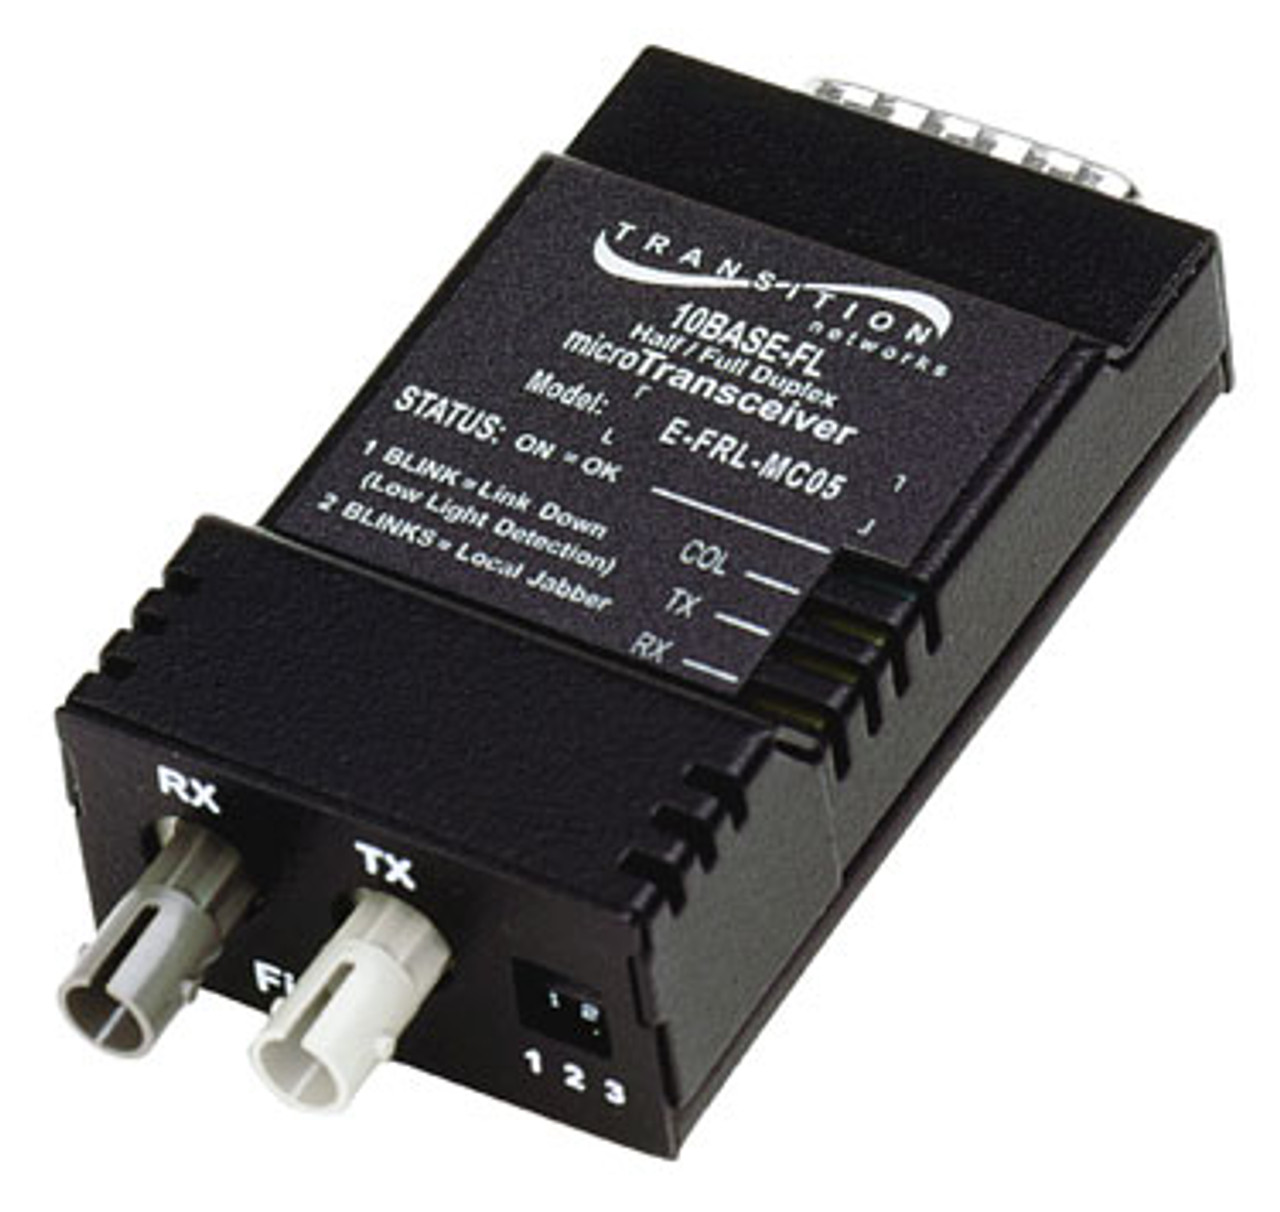 E-FRL-MC05 Transition 10Mbps 10Base-5 DB-15 to 10Base-FL Multi-Mode Fibre 2km 850nm ST Connector AUI Transceiver Module